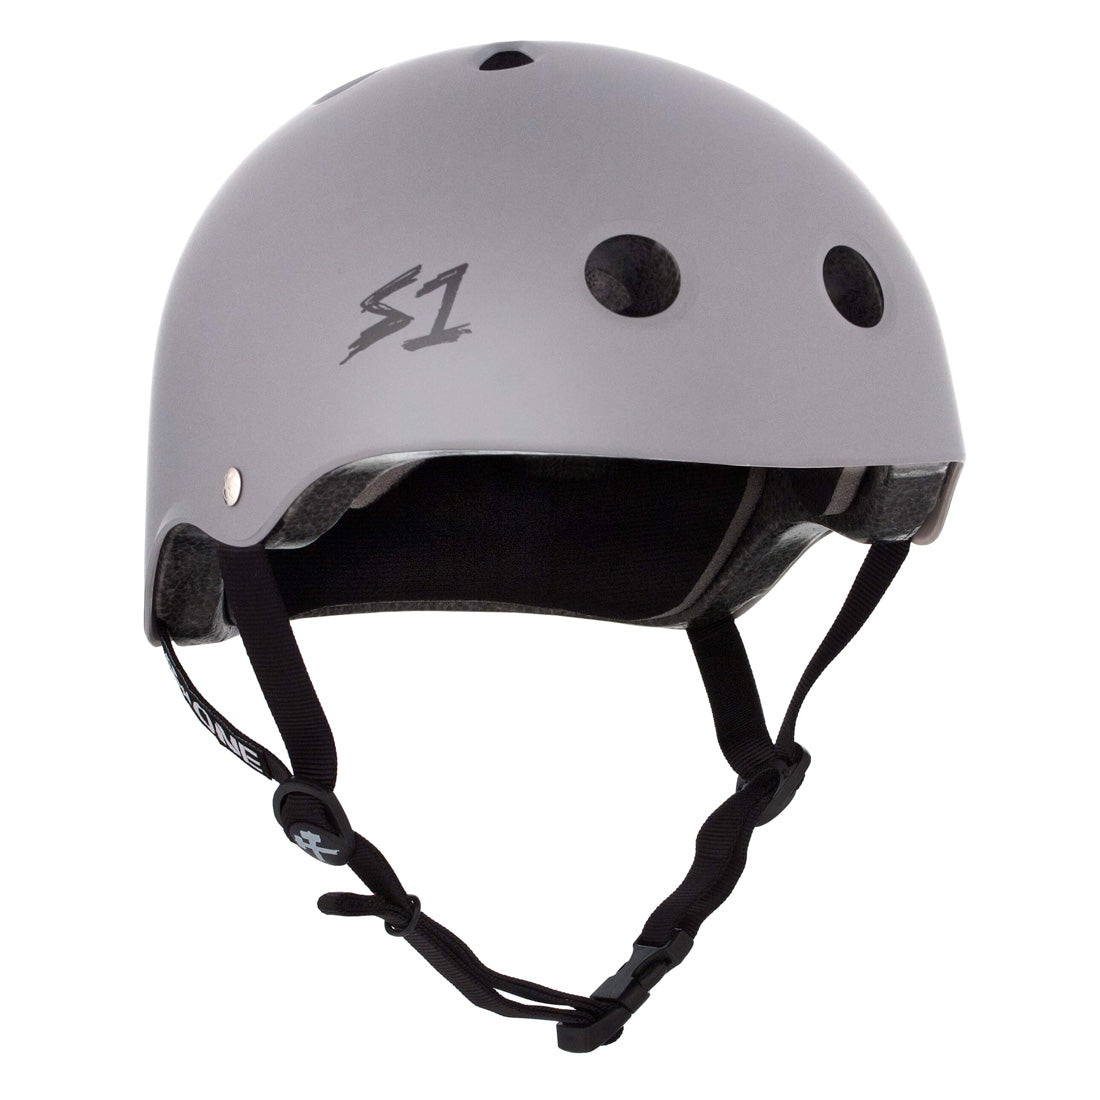 S-One Lifer Helmet - Light Grey Matte Helmets